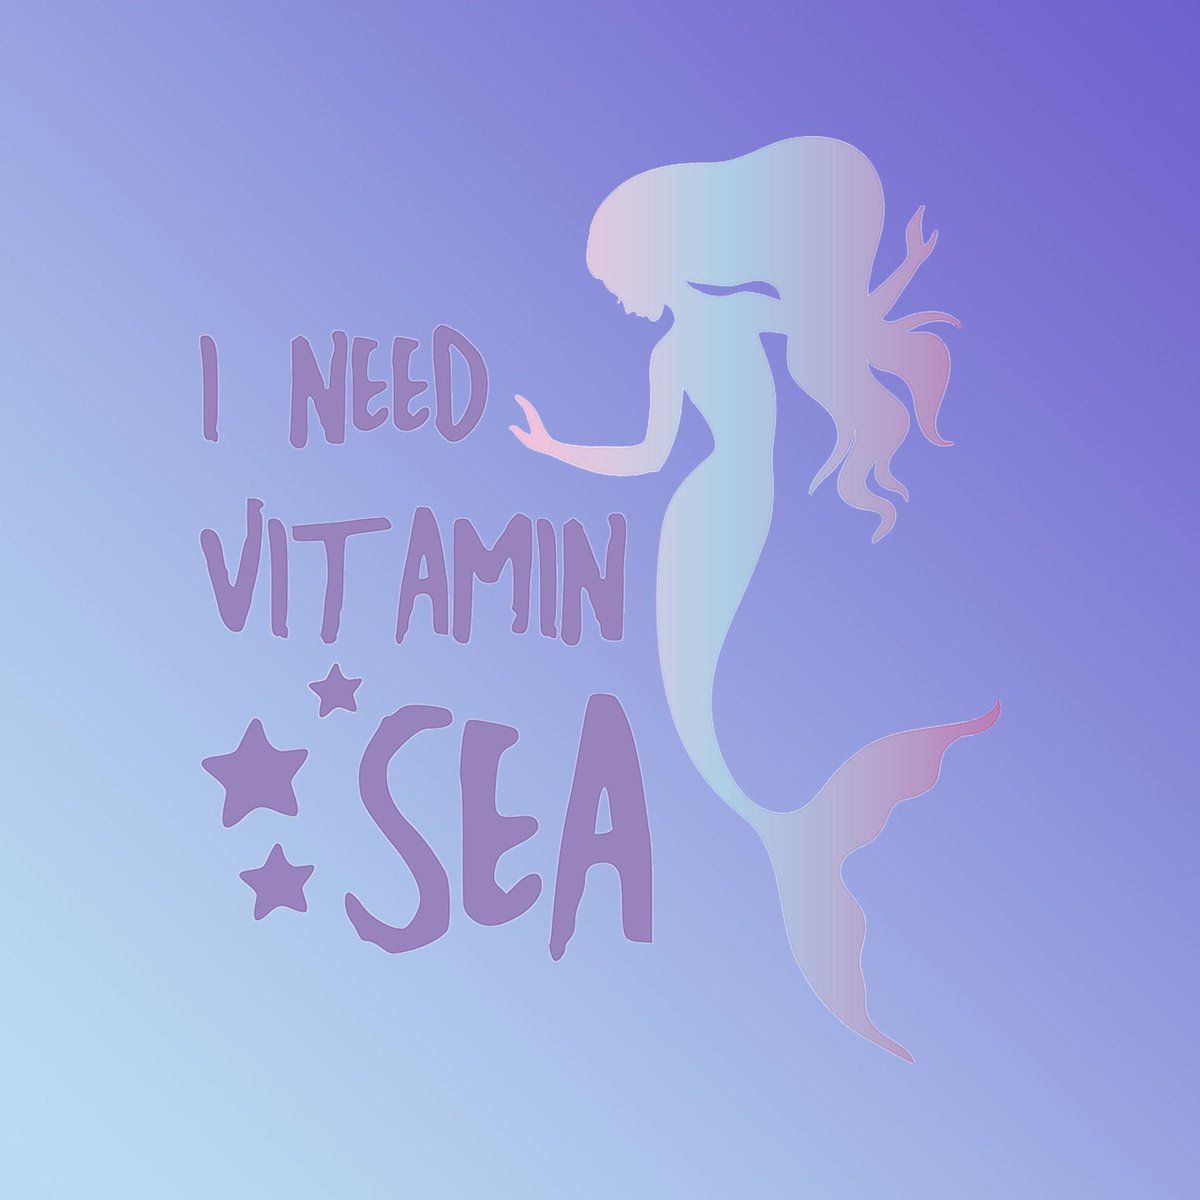 everpix you need vitamin SEA?